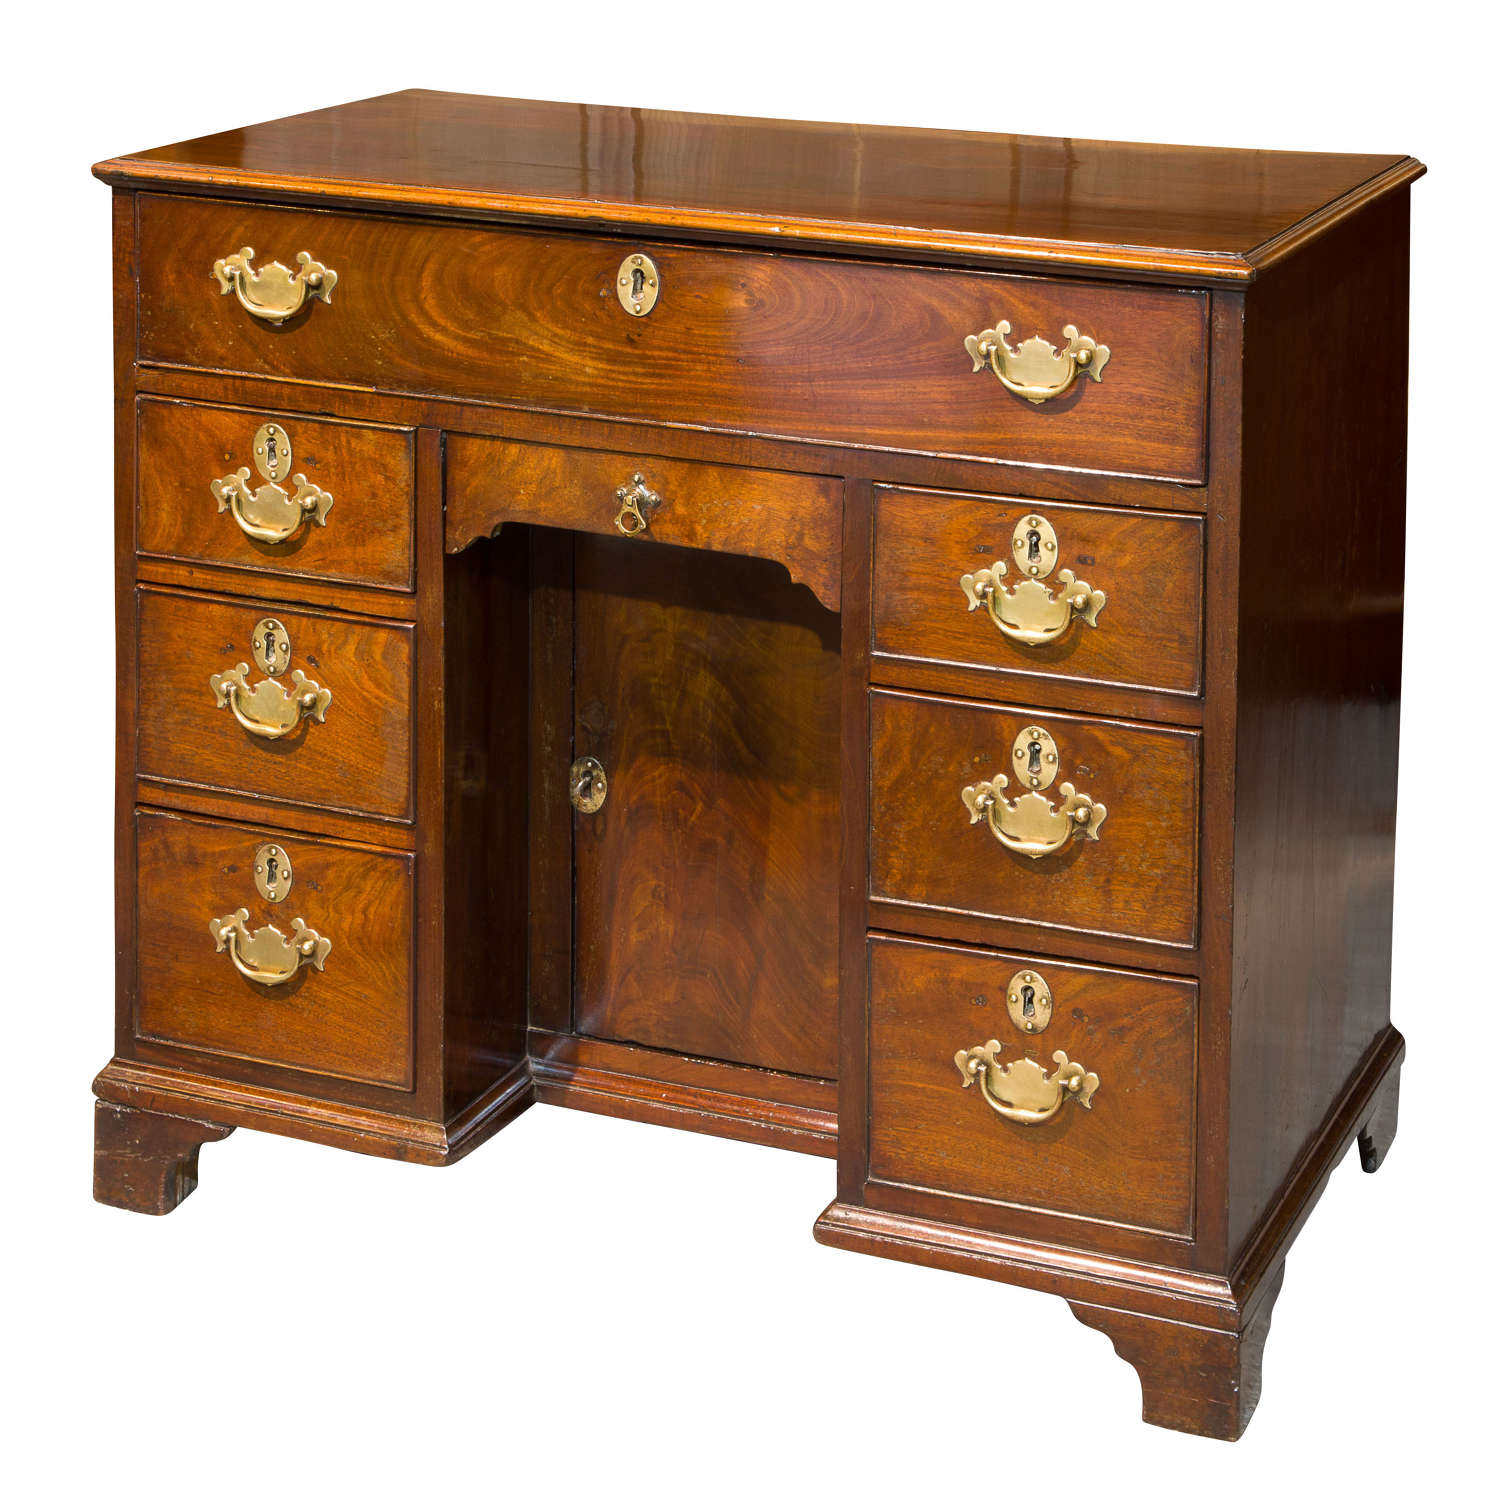 A George III small kneehole desk of six drawers